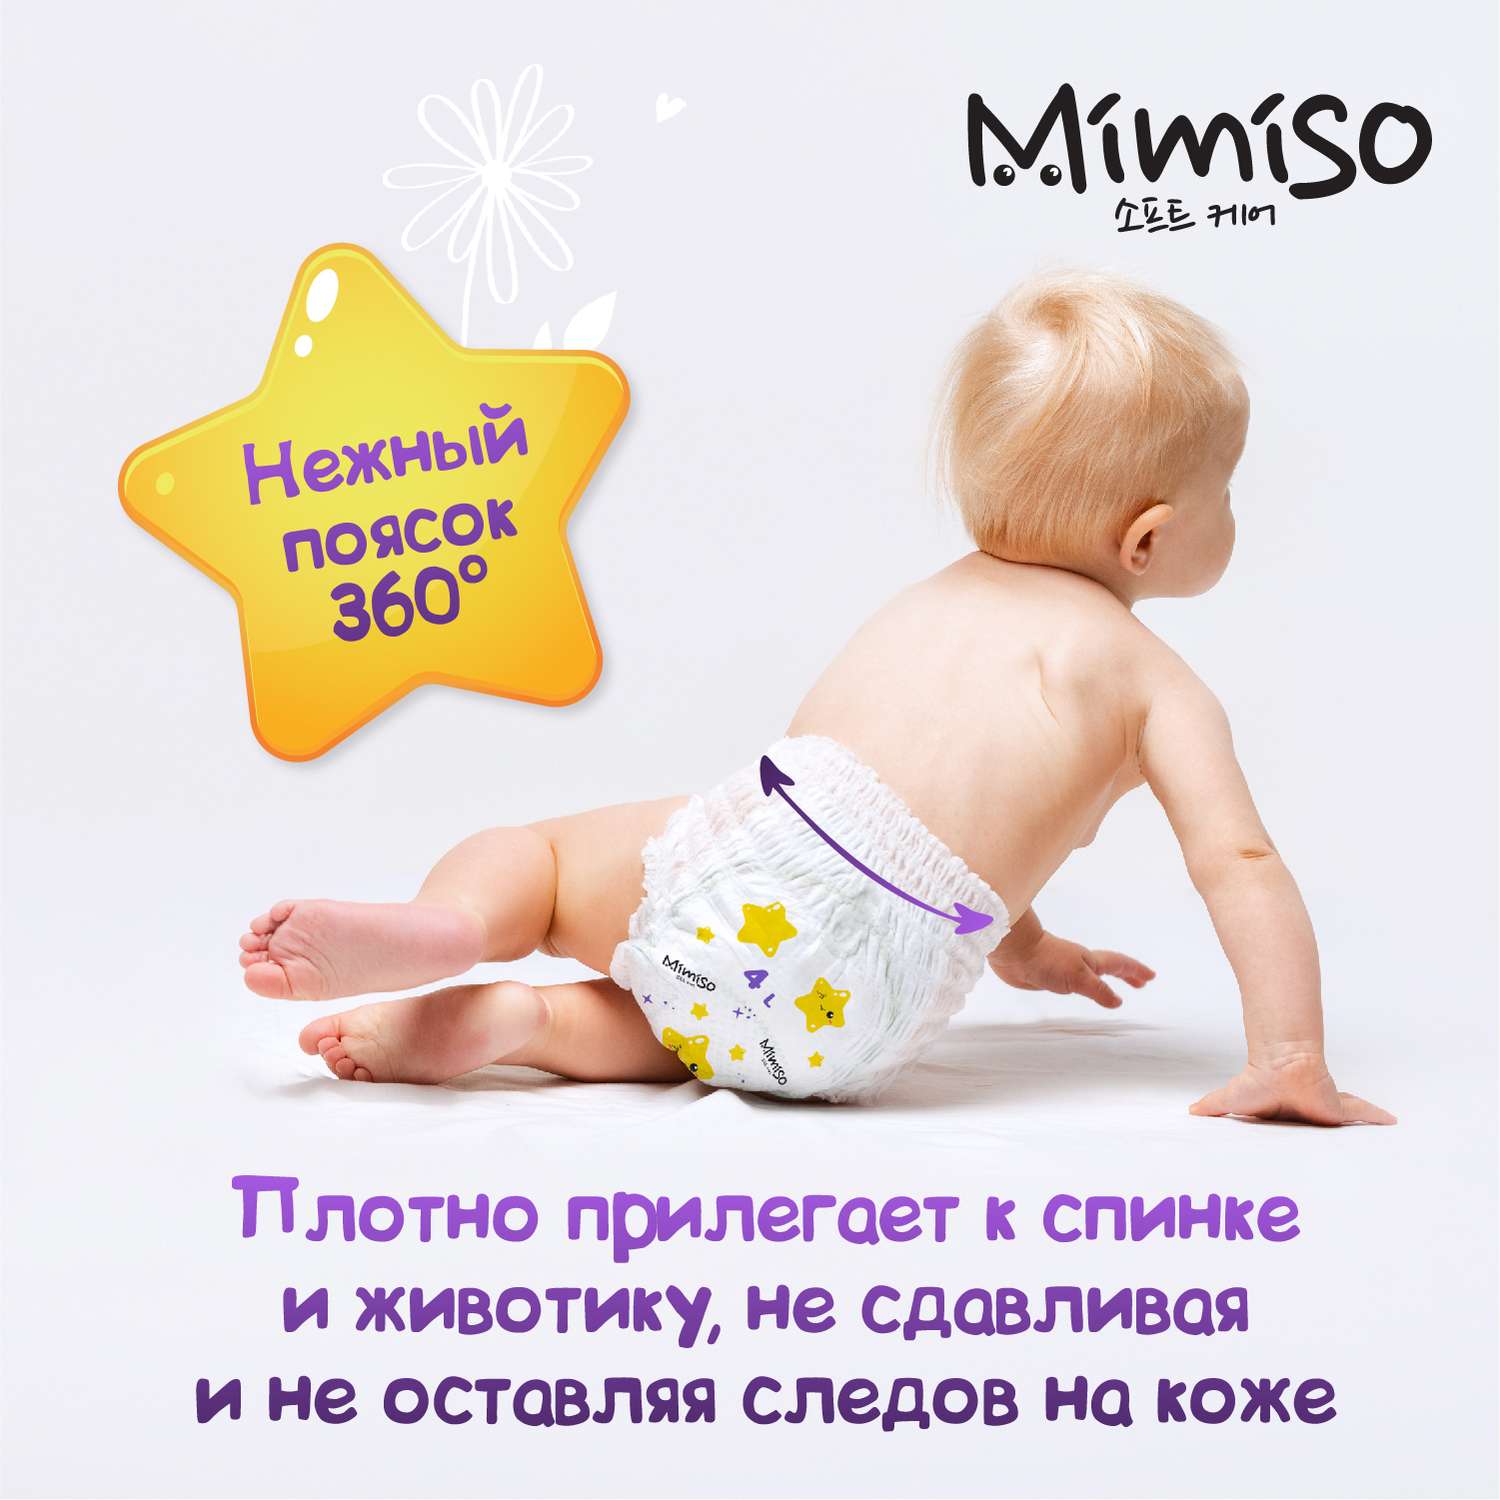 Трусики Mimiso одноразовые для детей 4/L 9-14 кг 42шт - фото 12